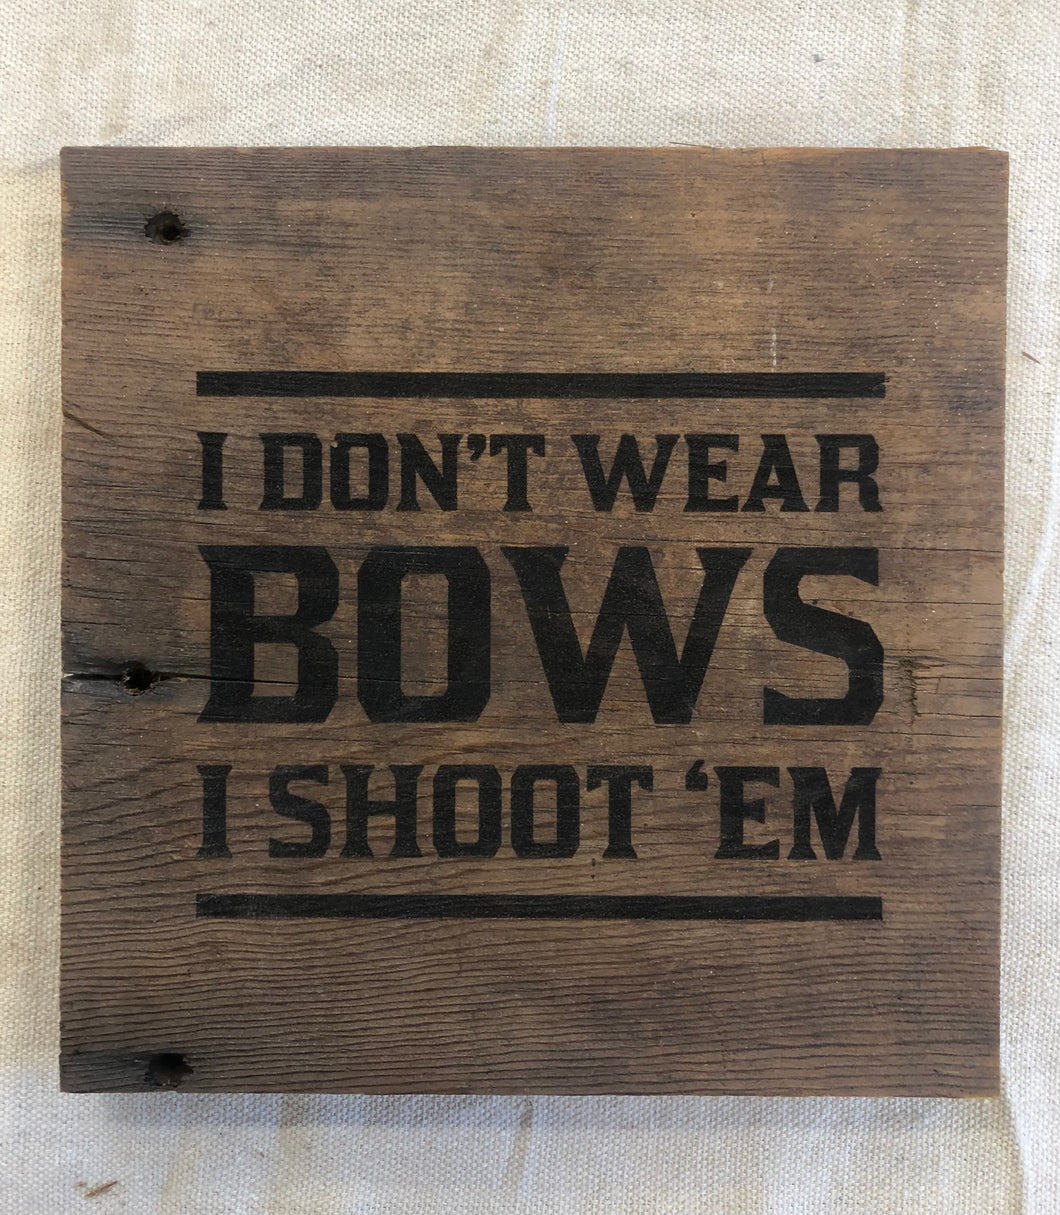 I don't wear bows, I shoot 'Em